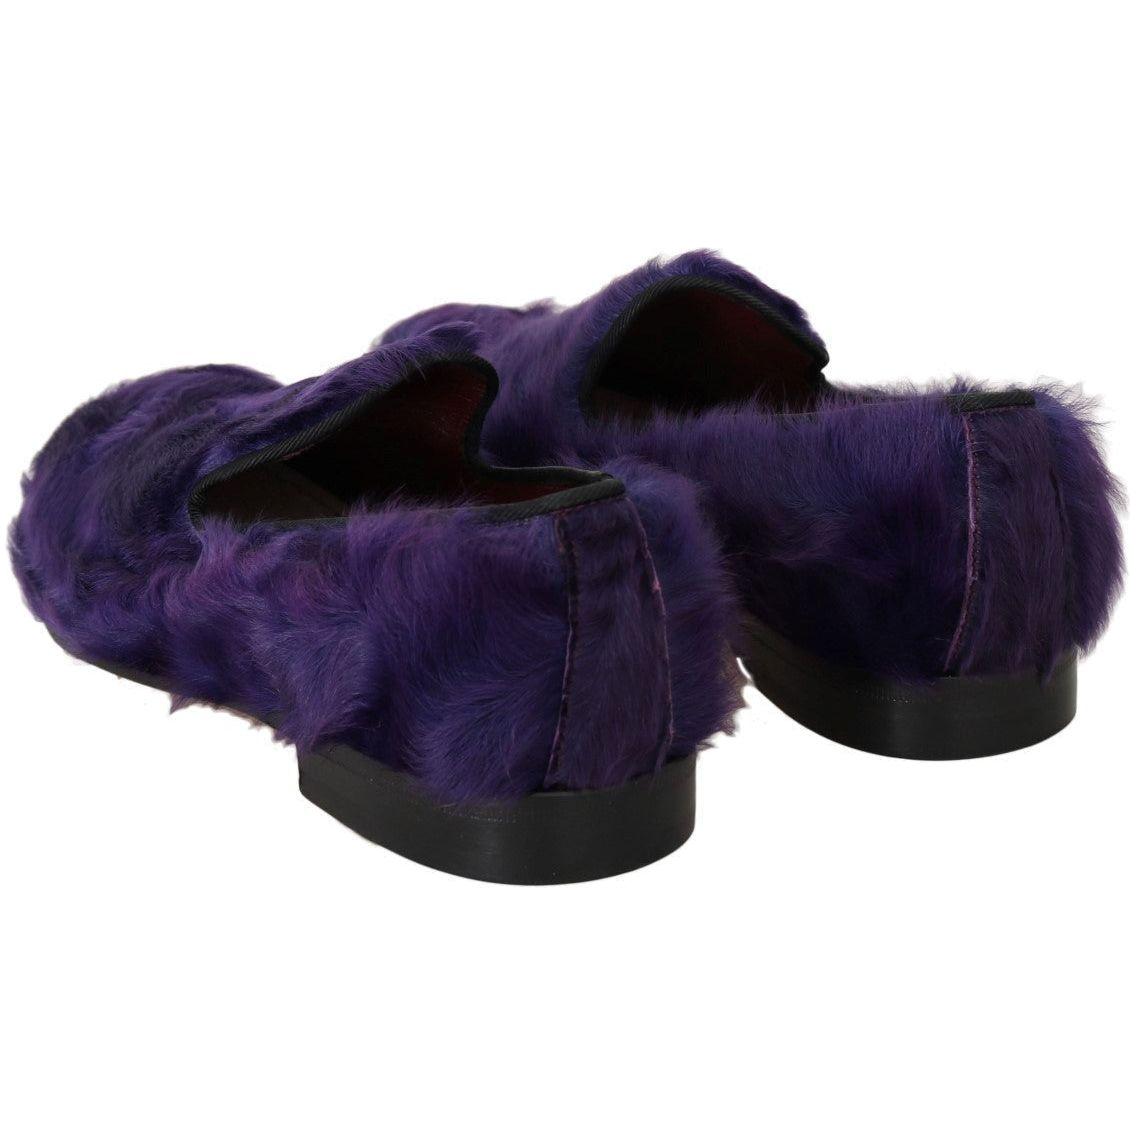 Dolce & Gabbana Plush Purple Sheep Fur Loafers purple-sheep-fur-leather-loafers 466240-purple-sheep-fur-leather-loafers-8.jpg